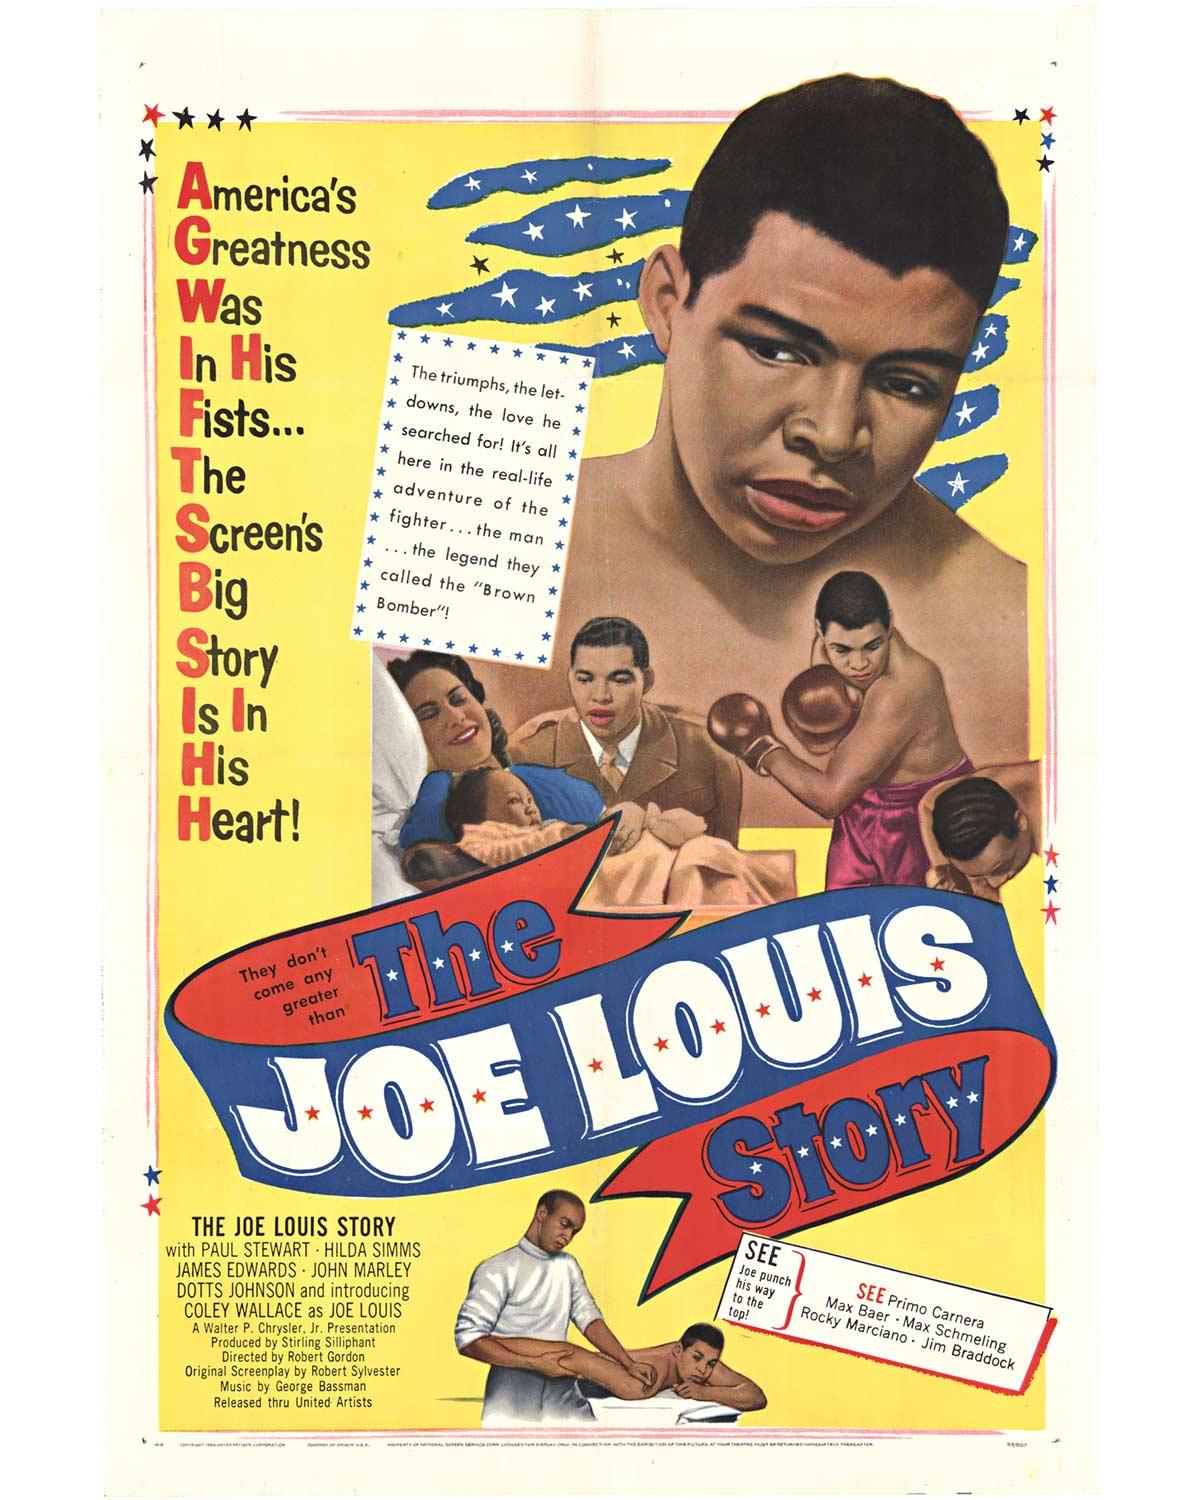 Unknown Print - Original "The Joe Louis Story", 1953 vintage movie poster